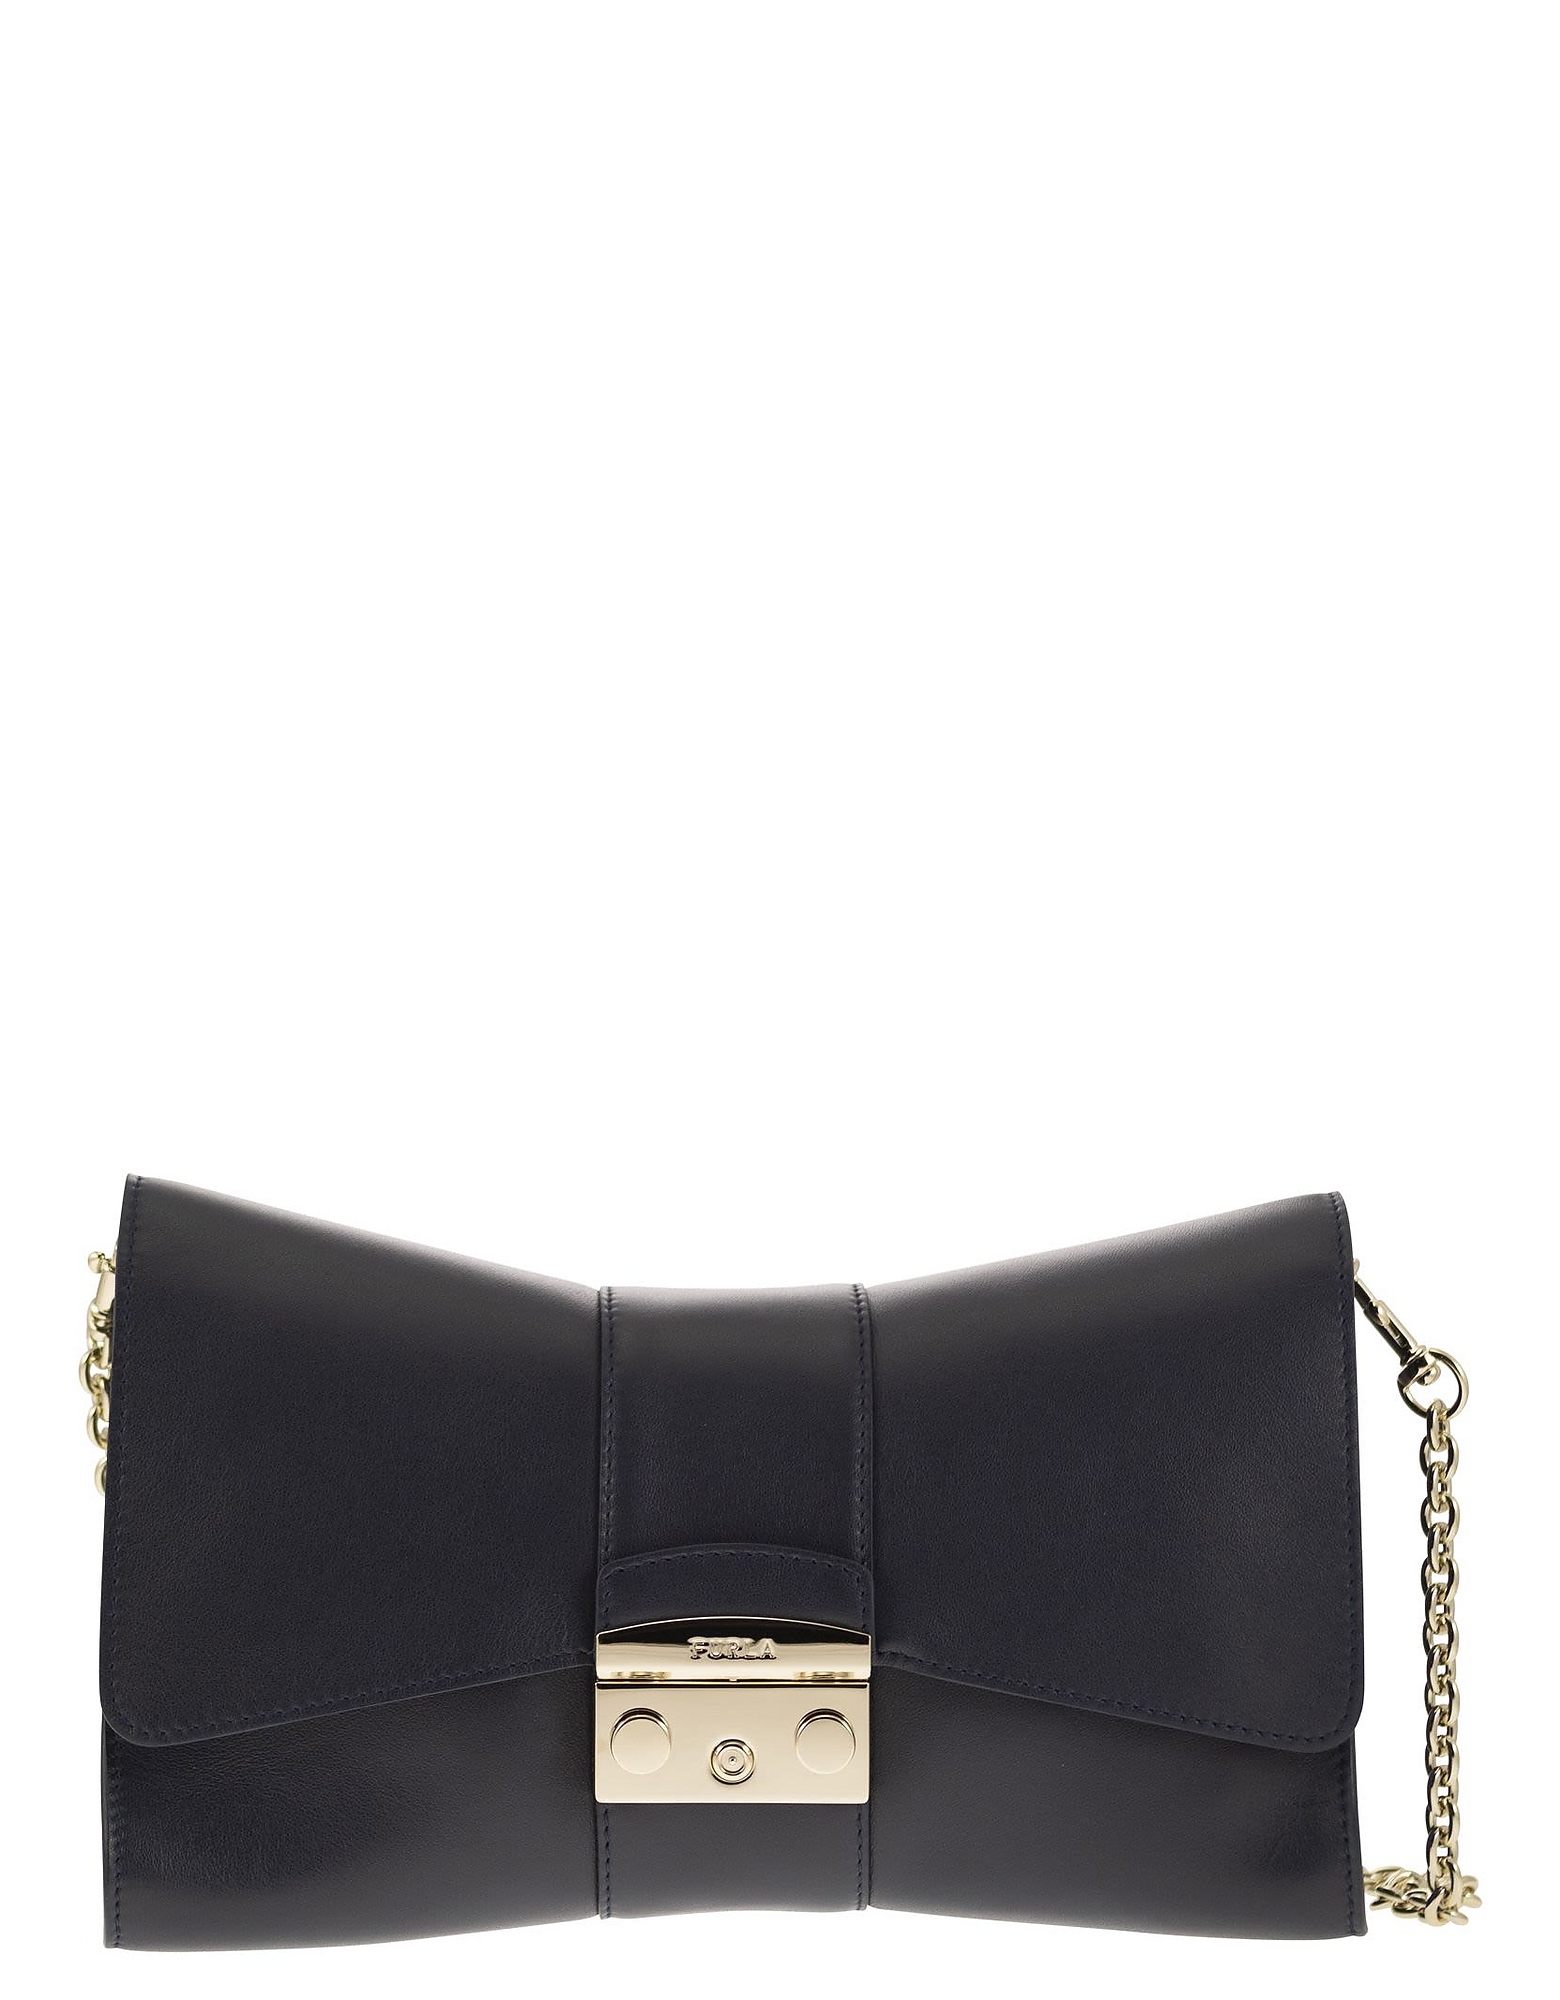 Furla Designer Handbags Metropolis - Shoulder Bag S In Noir